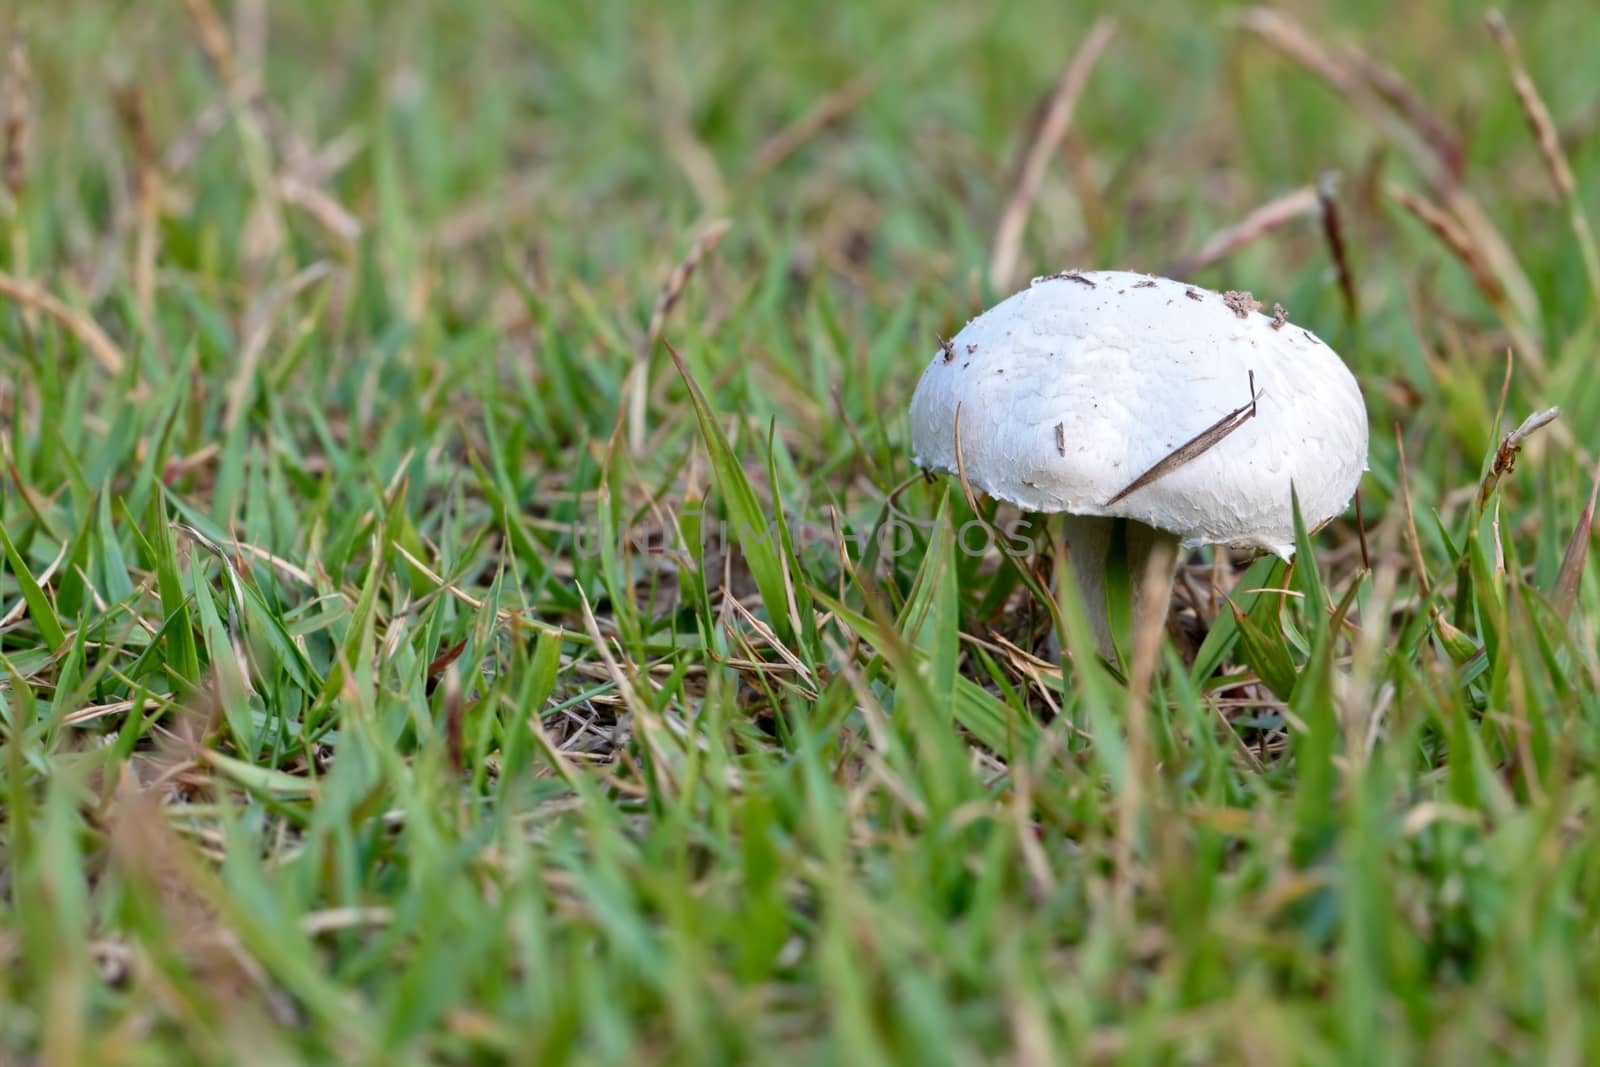 Wild-growing mushroom (Champignon, lat.: Agaricus bisporus) in grass with selected focus